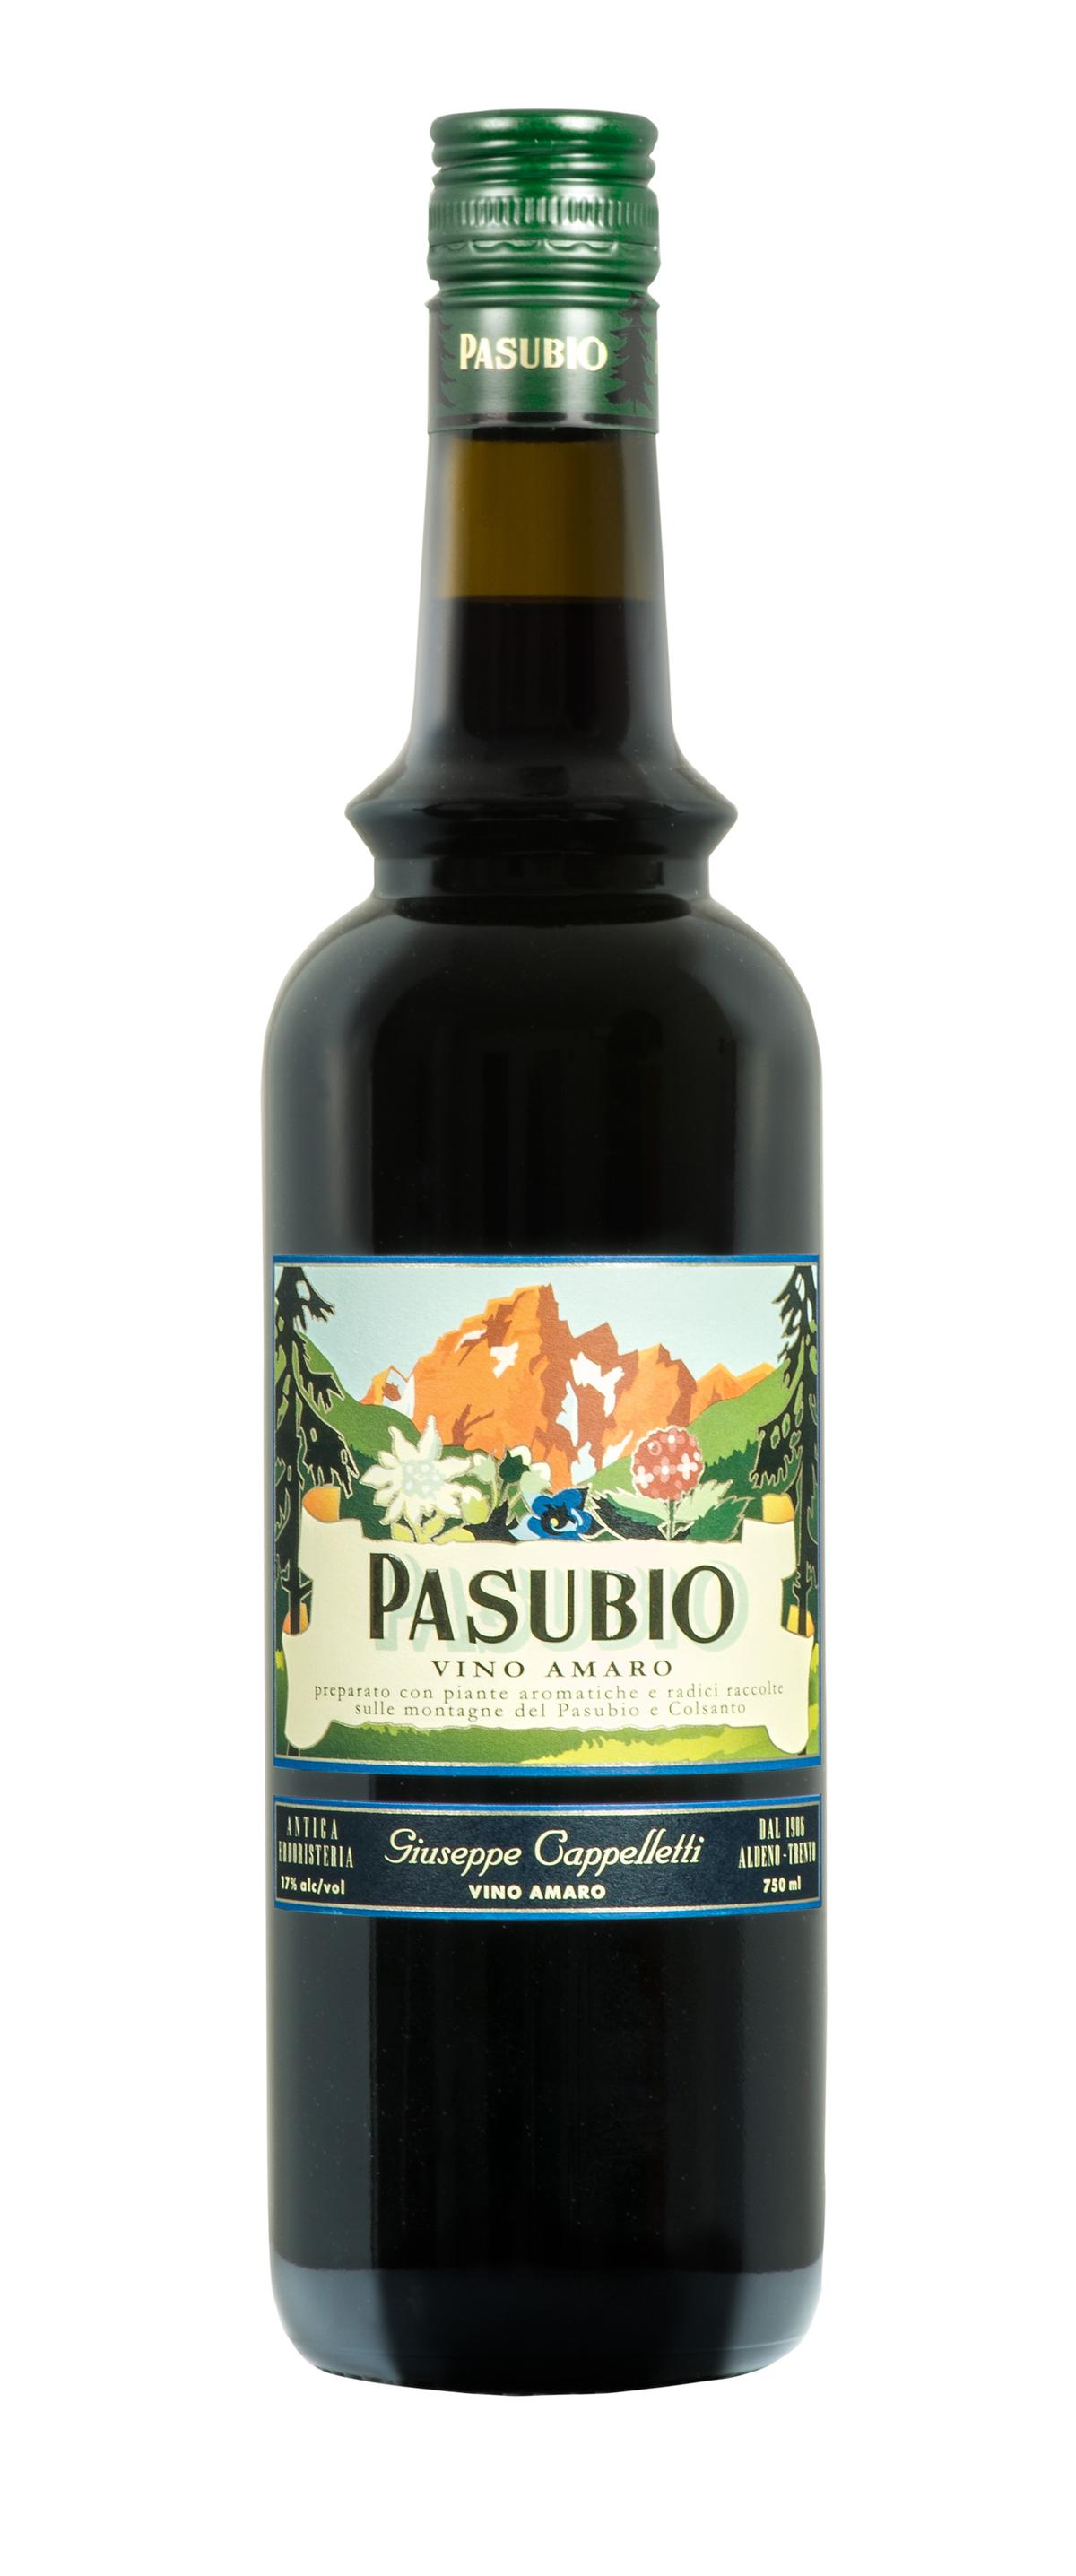 Pasubio Vino Amaro. (Courtesy of Haus Alpenz)